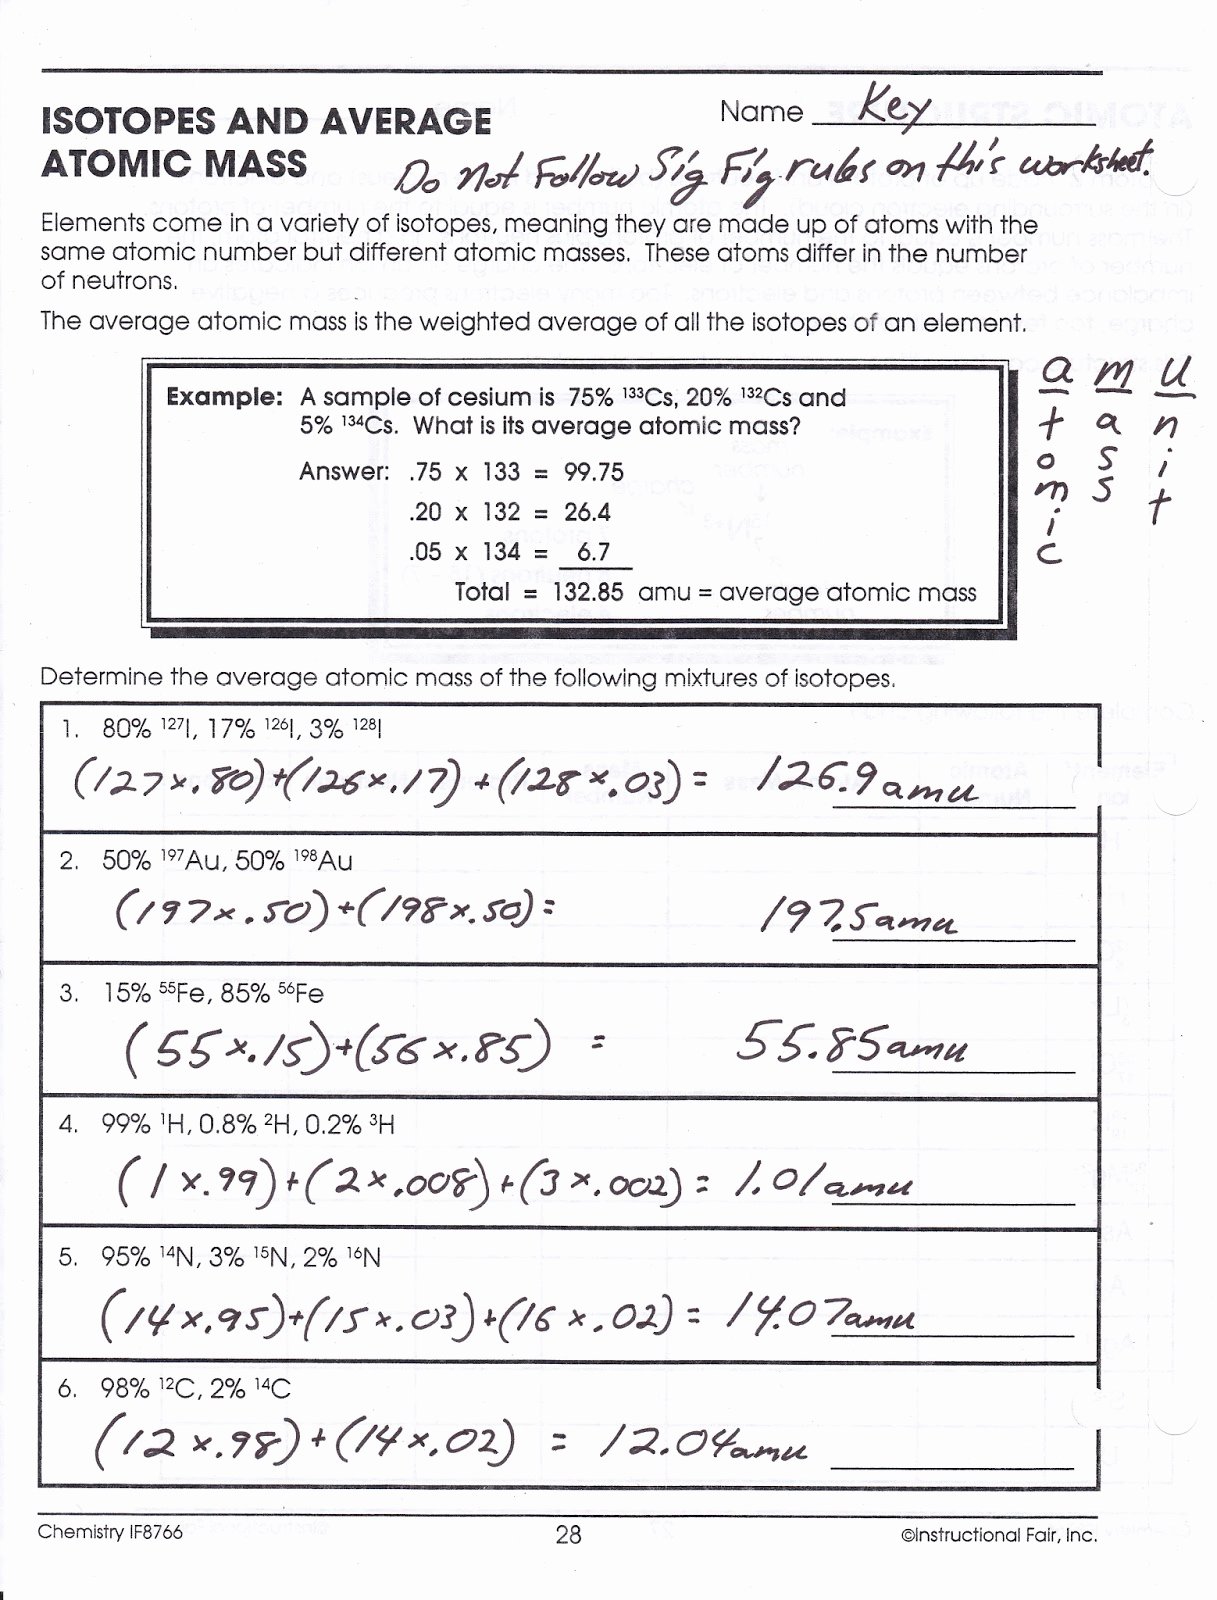 Calculating Average atomic Mass Worksheet Fresh Calculating Average atomic Mass Worksheets Answer Key